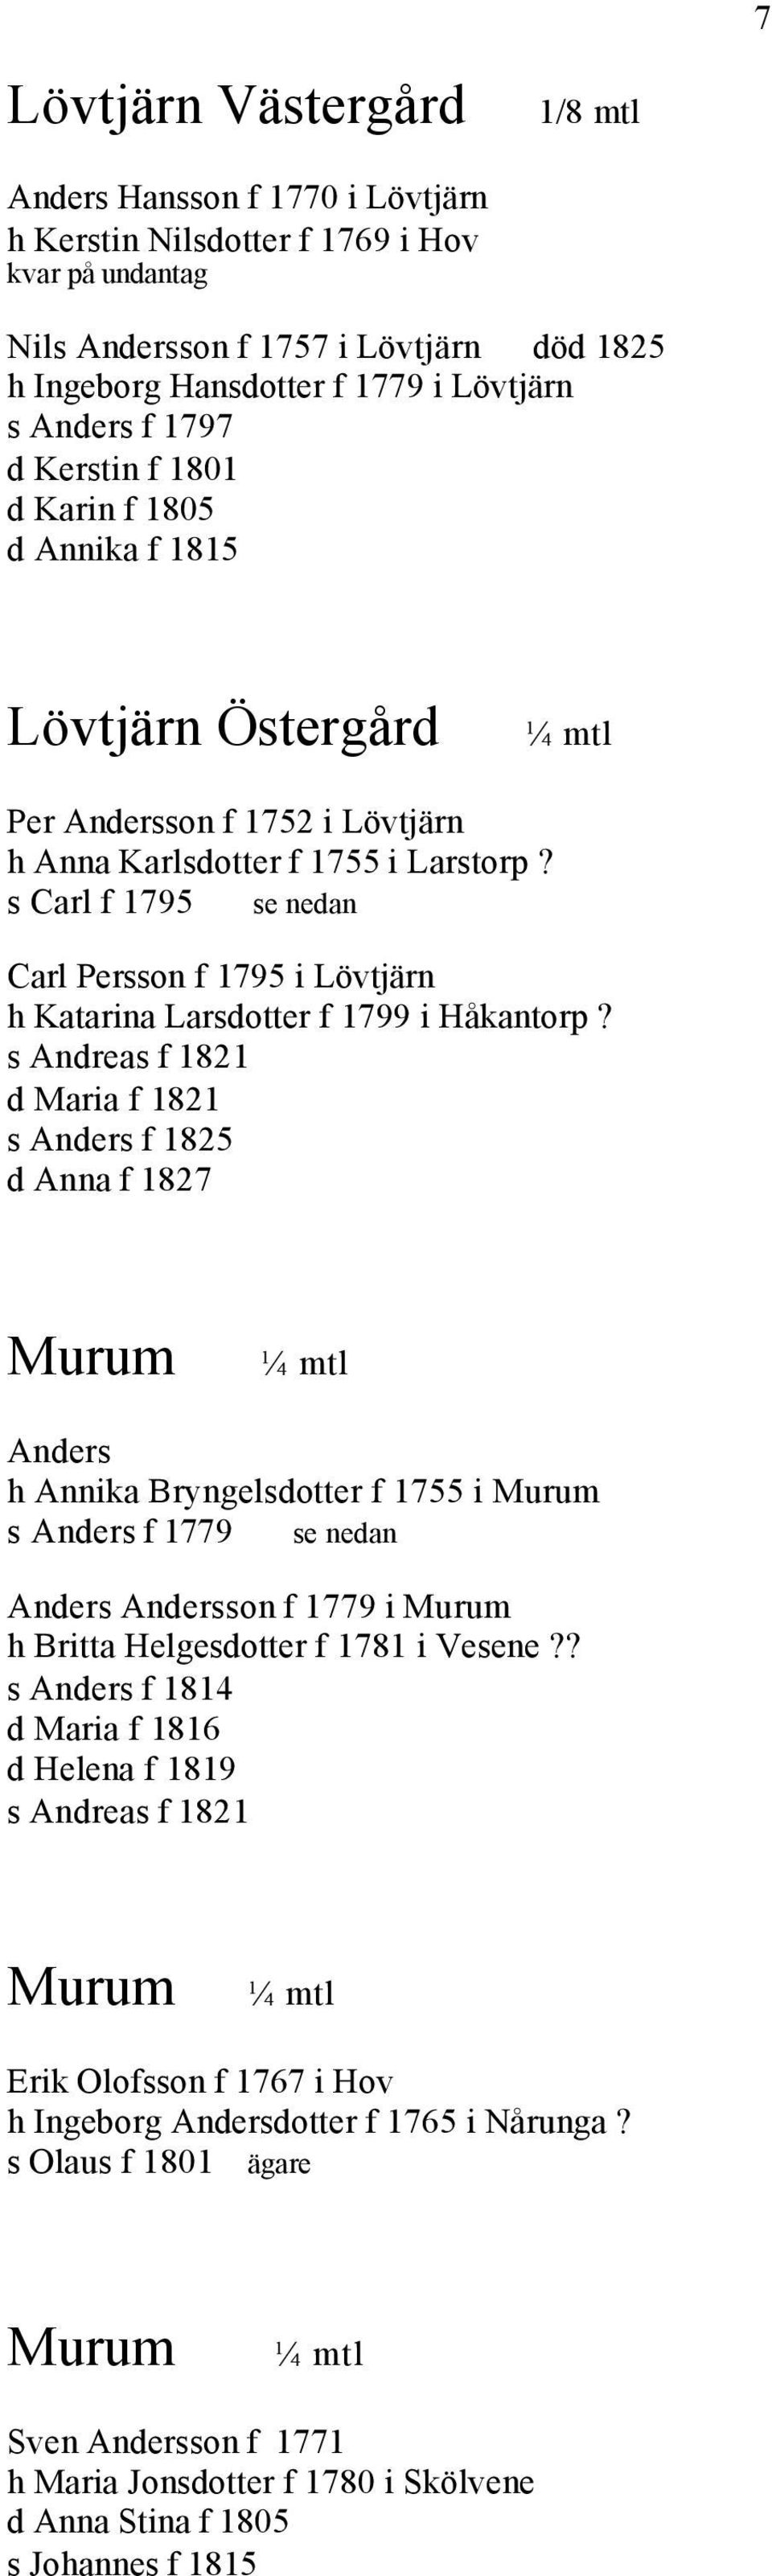 s Carl f 1795 se nedan Carl Persson f 1795 i Lövtjärn h Katarina Larsdotter f 1799 i Håkantorp?